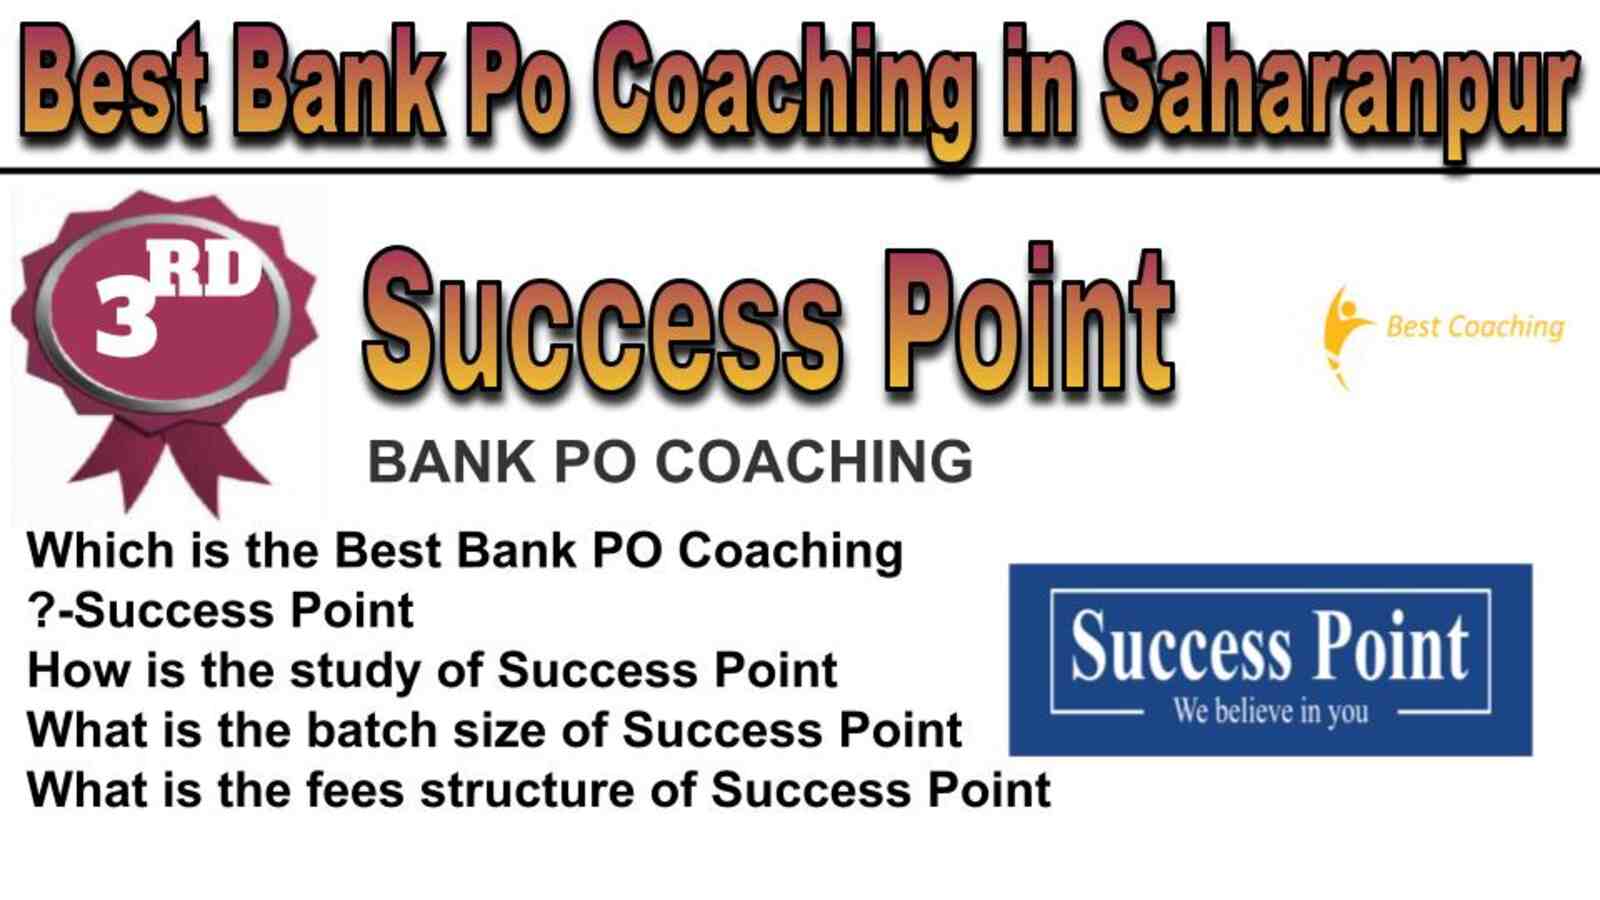 Rank 3 best bank po coaching in Saharanpur